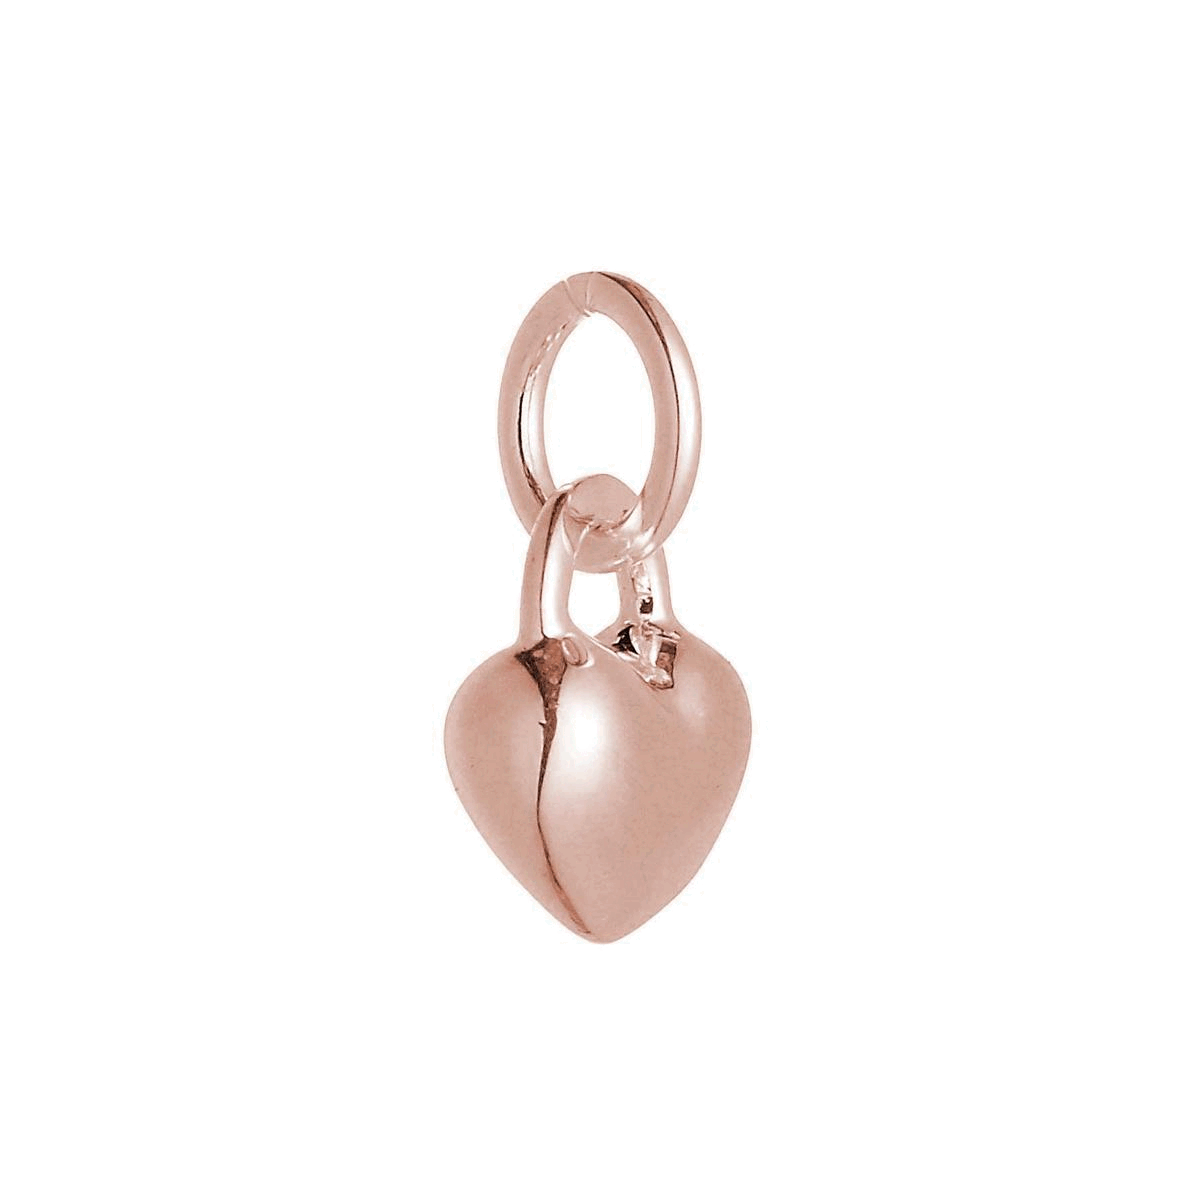 solid rose gold heart charm for pendant or bracelet